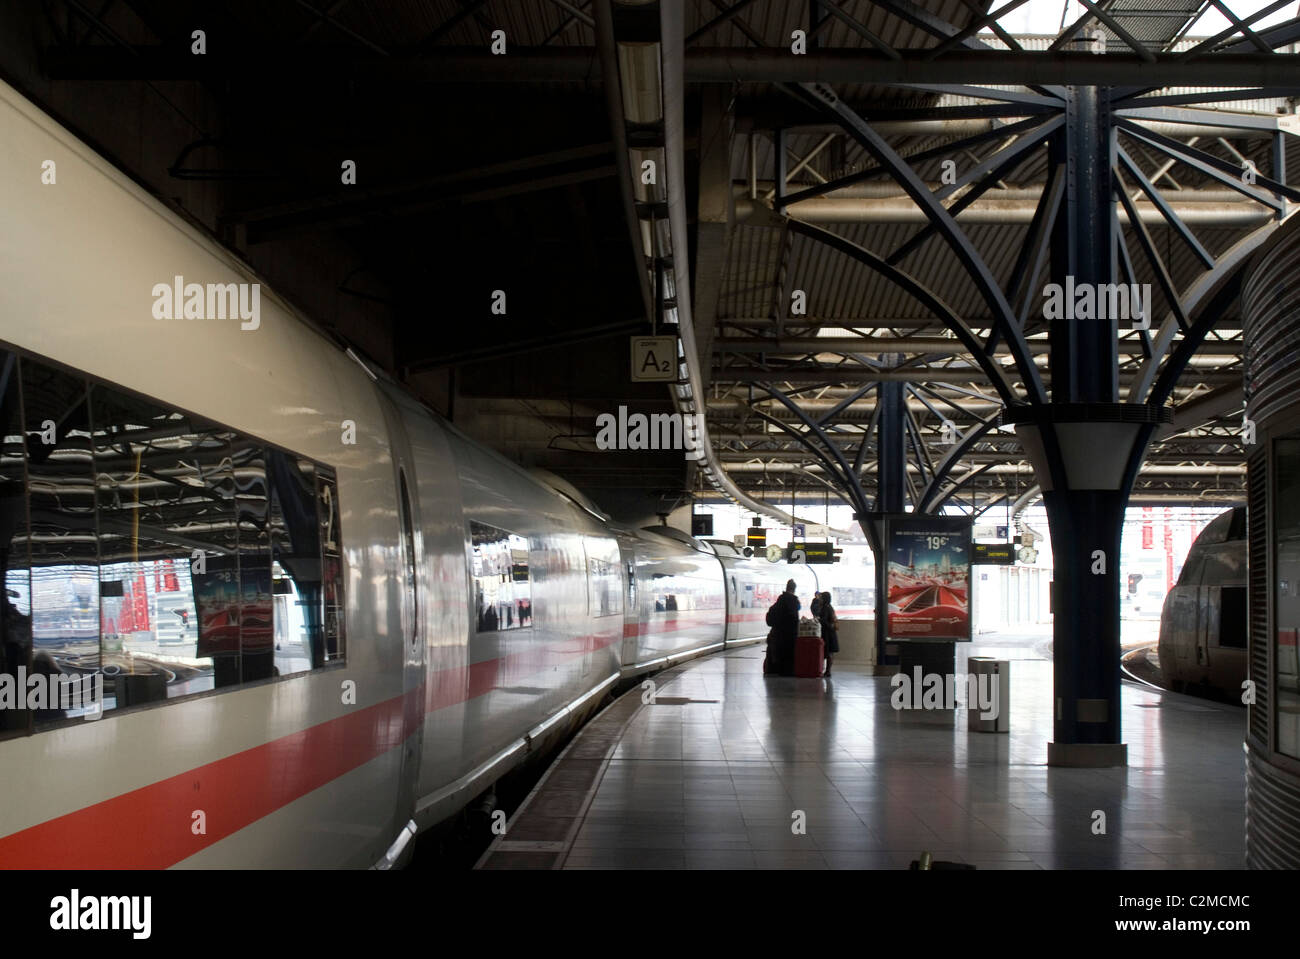 ICE (Intercity Express) Bahnhof, Brüssel Zuid, Brüssel, Belgien Stockfoto